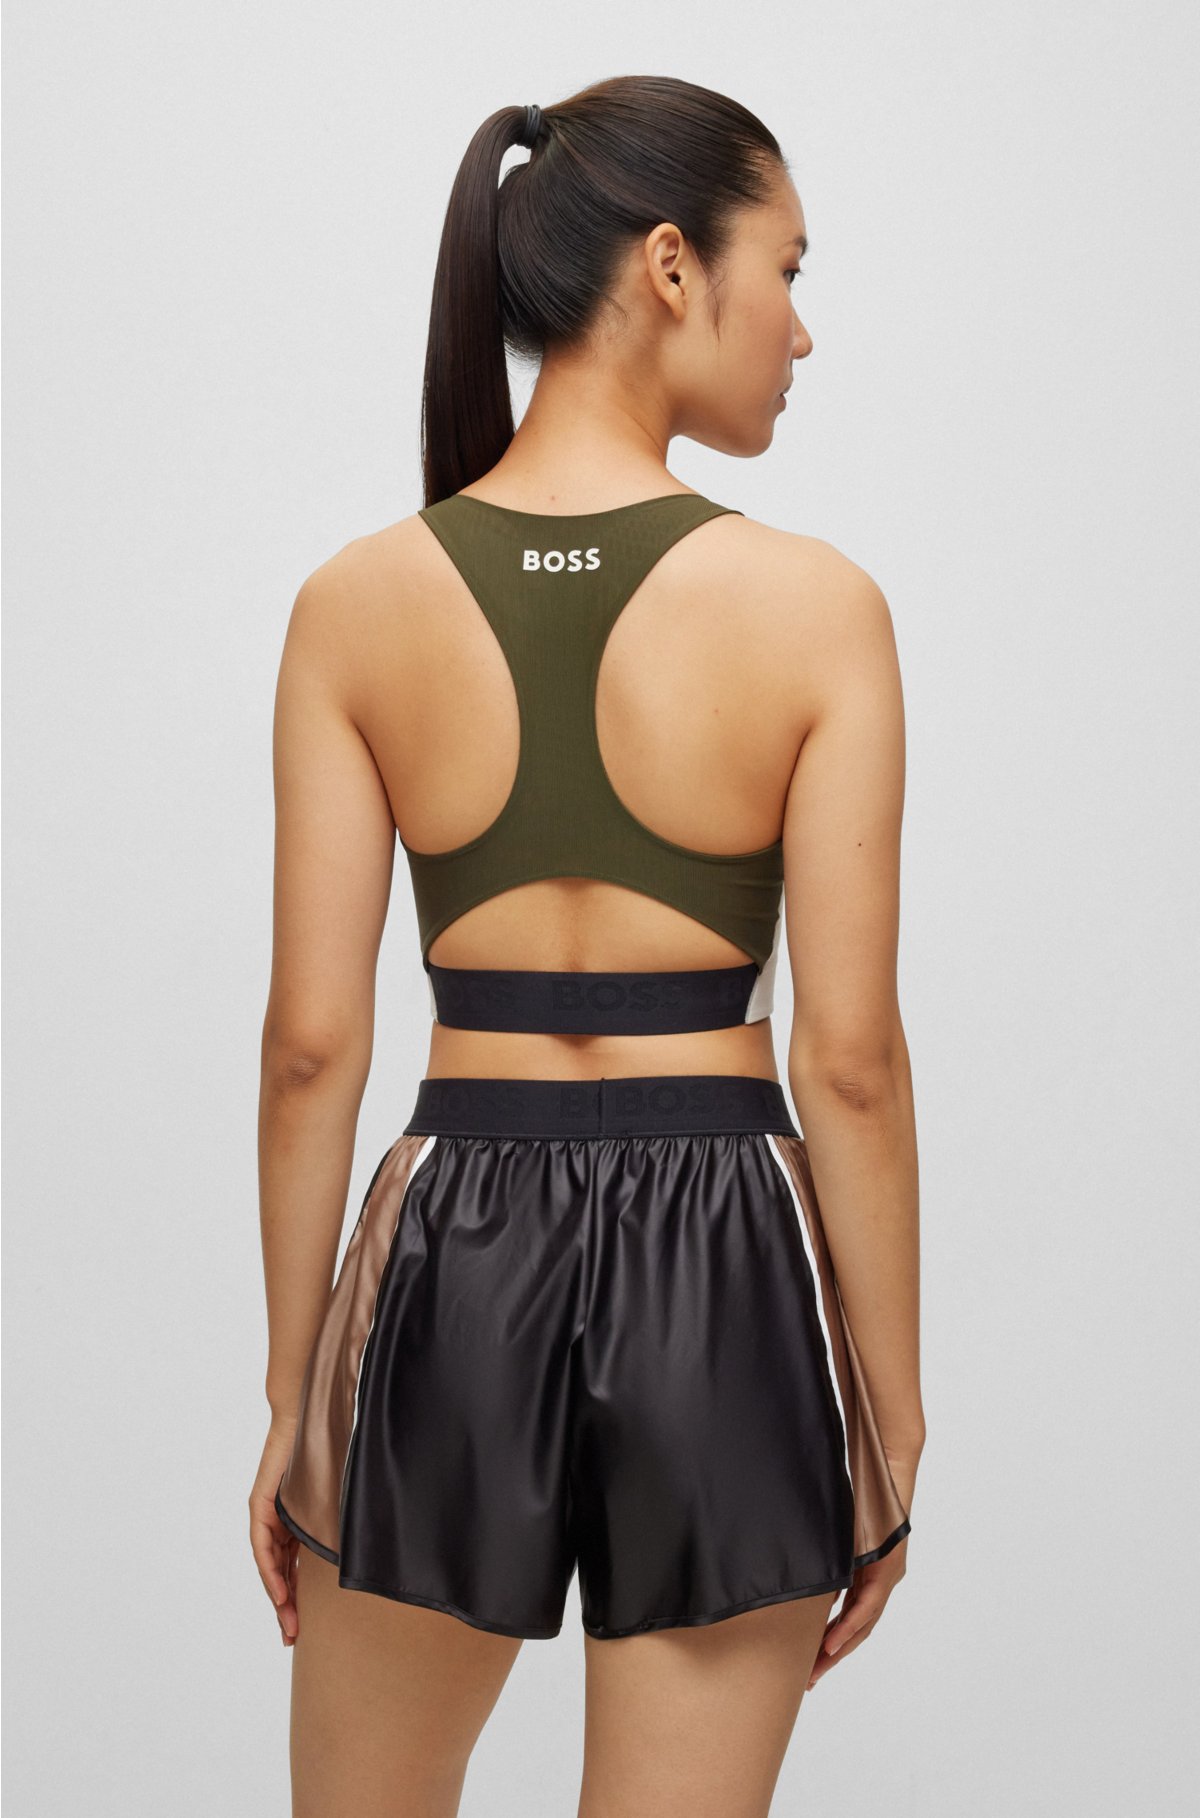 BOSS - BOSS x Alica Schmidt logo sports bra with color-blocking